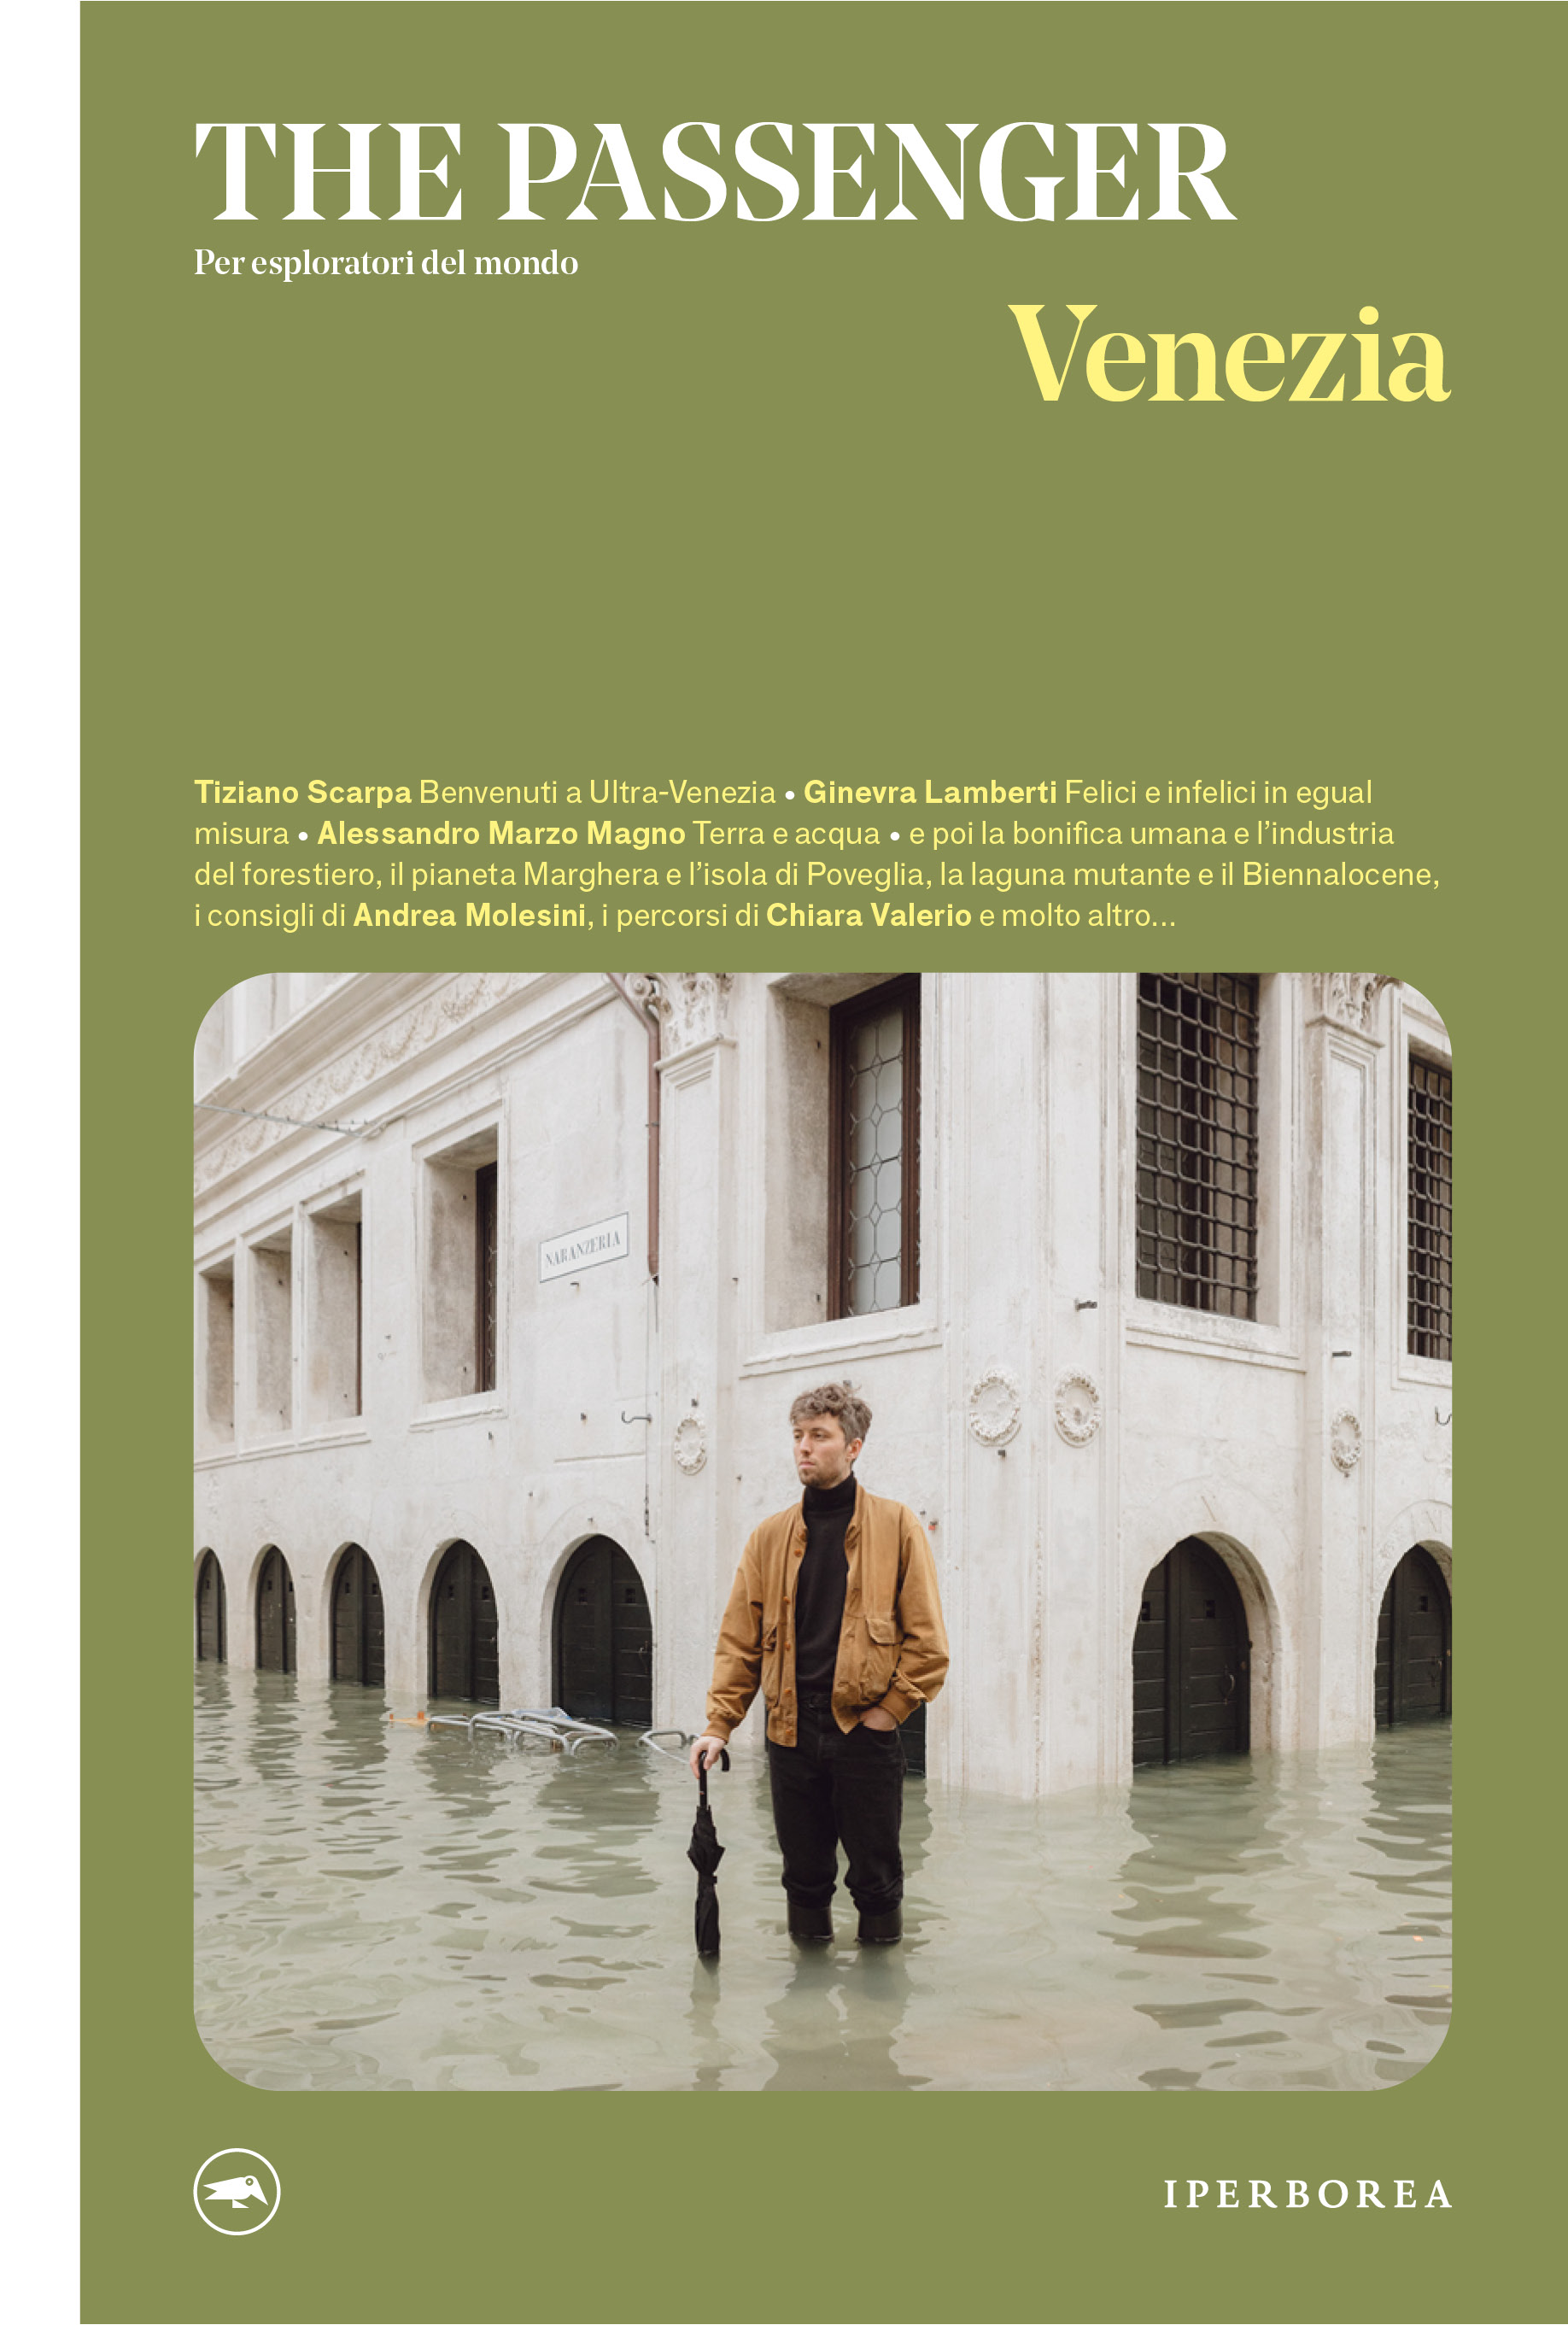 https://iperborea.com/files/website/HomepageBlock/cover_venezia.jpg